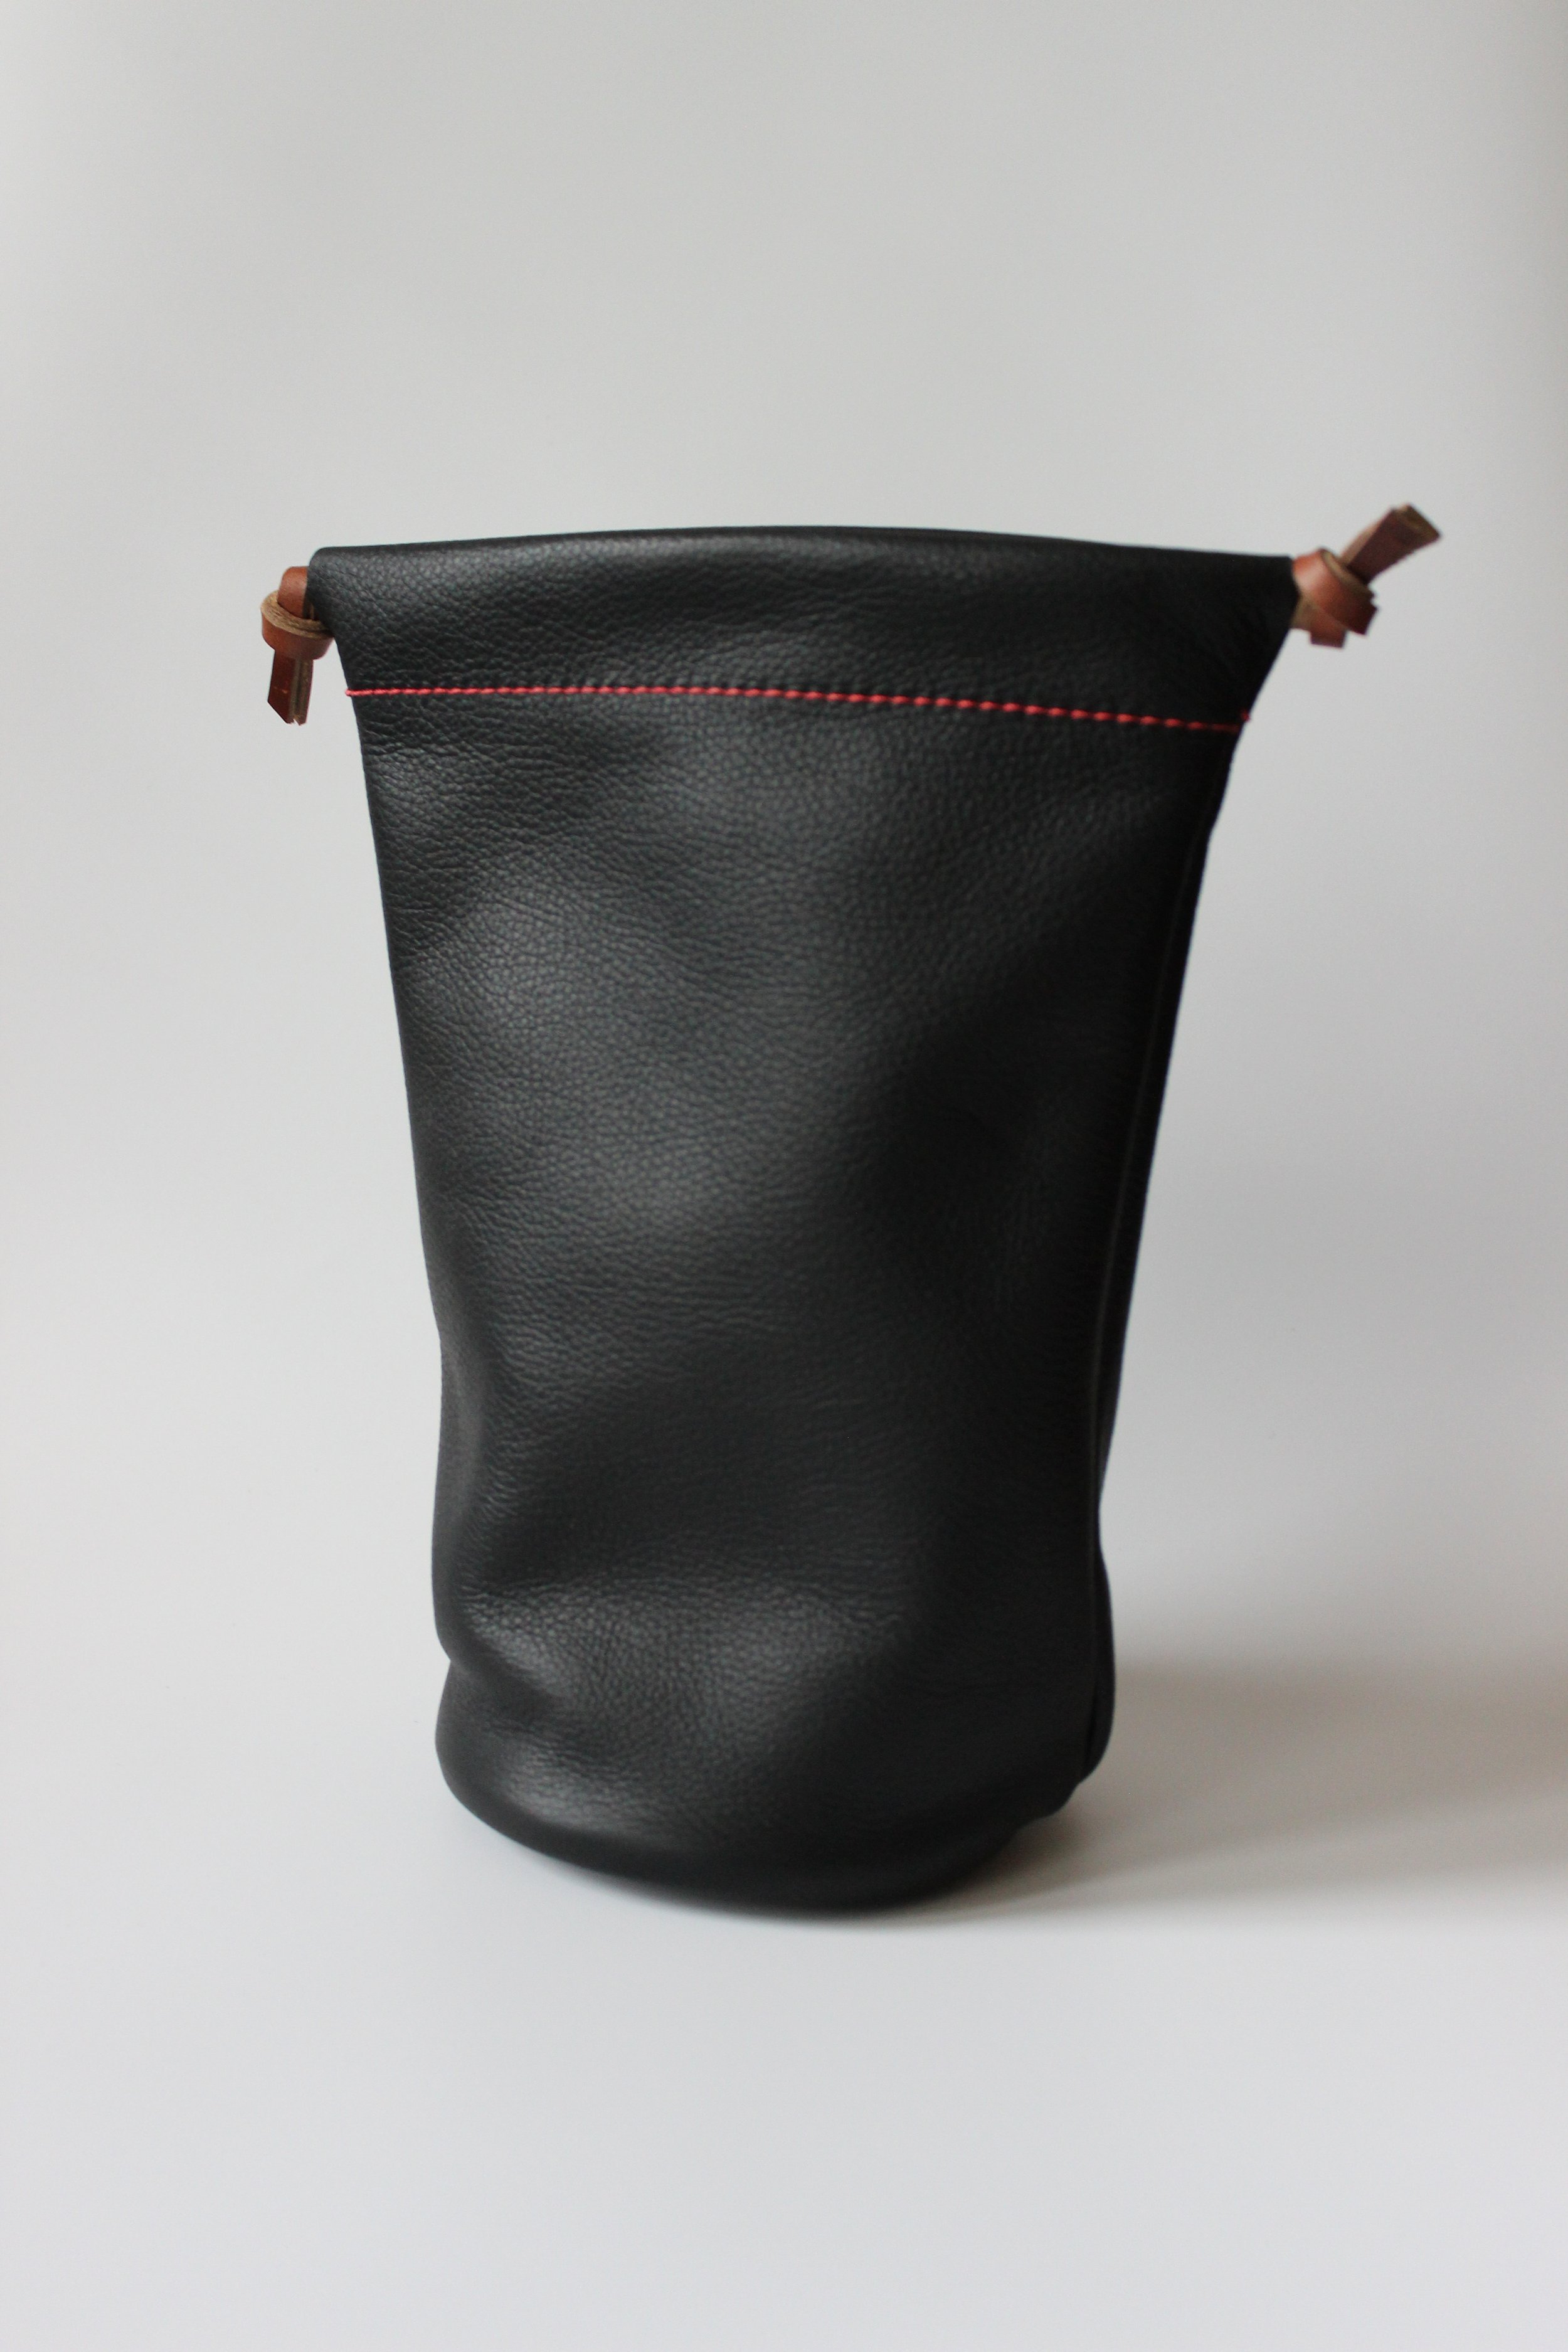 NH Leather Shag Bag – $98